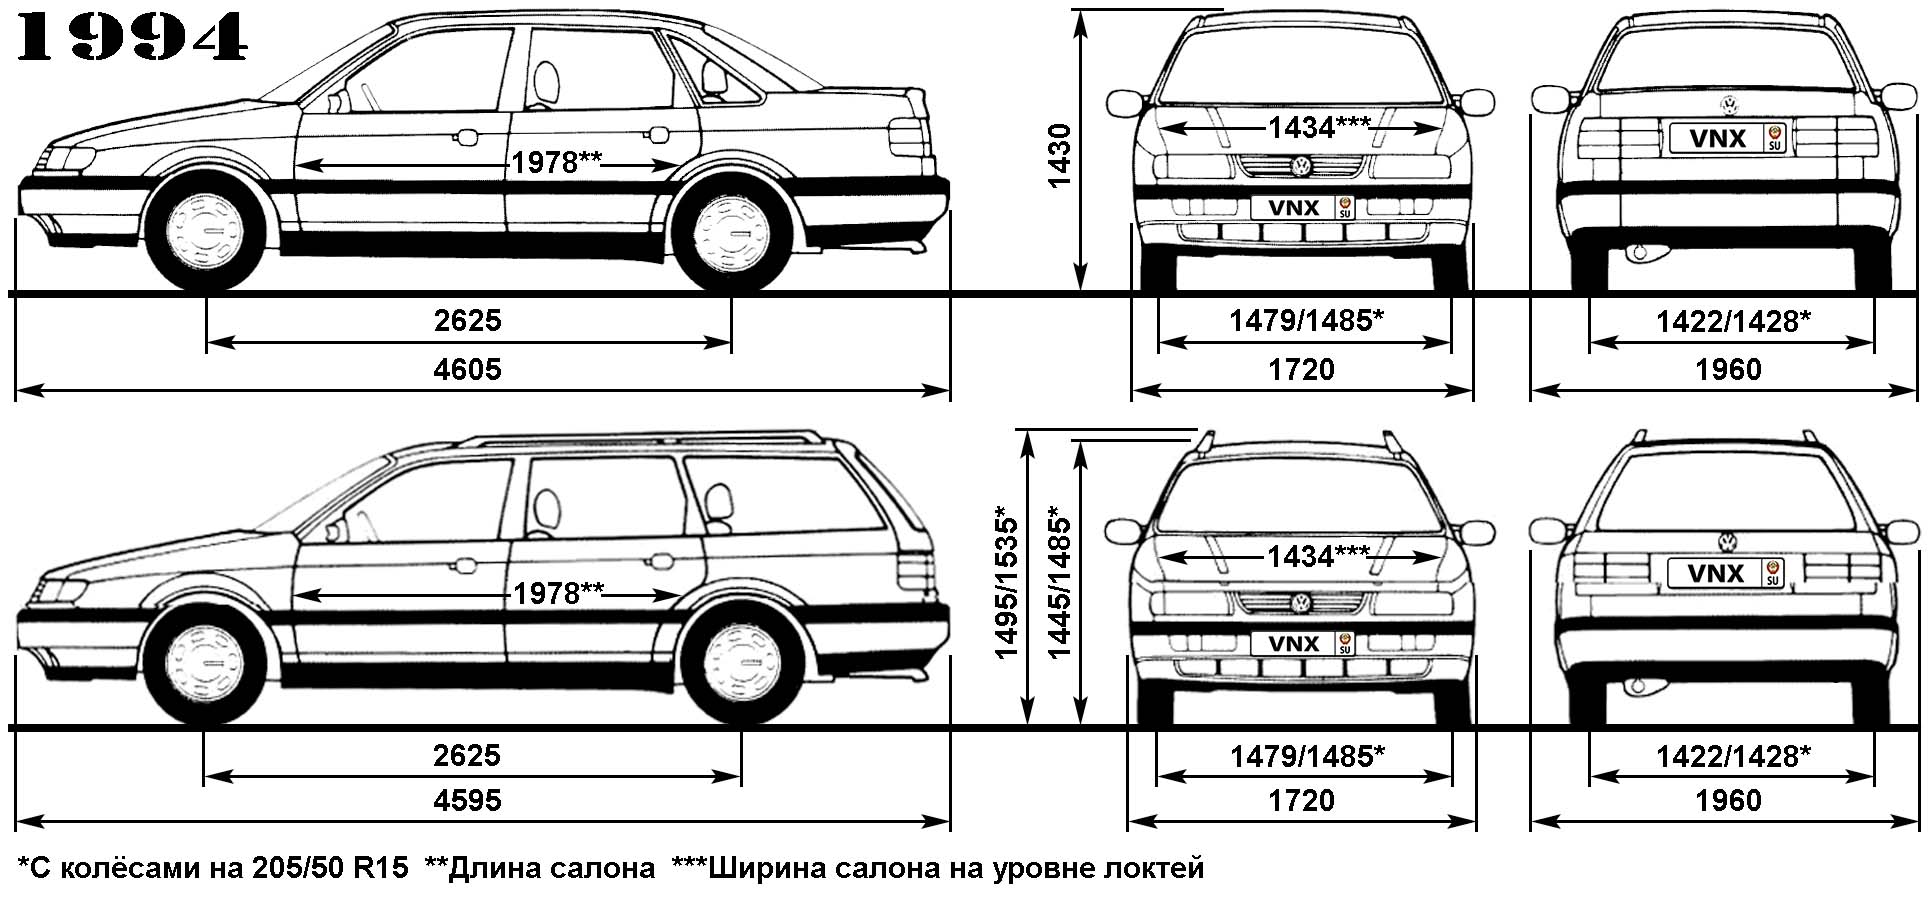 Габаритные размеры Фольксваген Пассат Б4 1993-1997 (dimensions VW Passat B4)